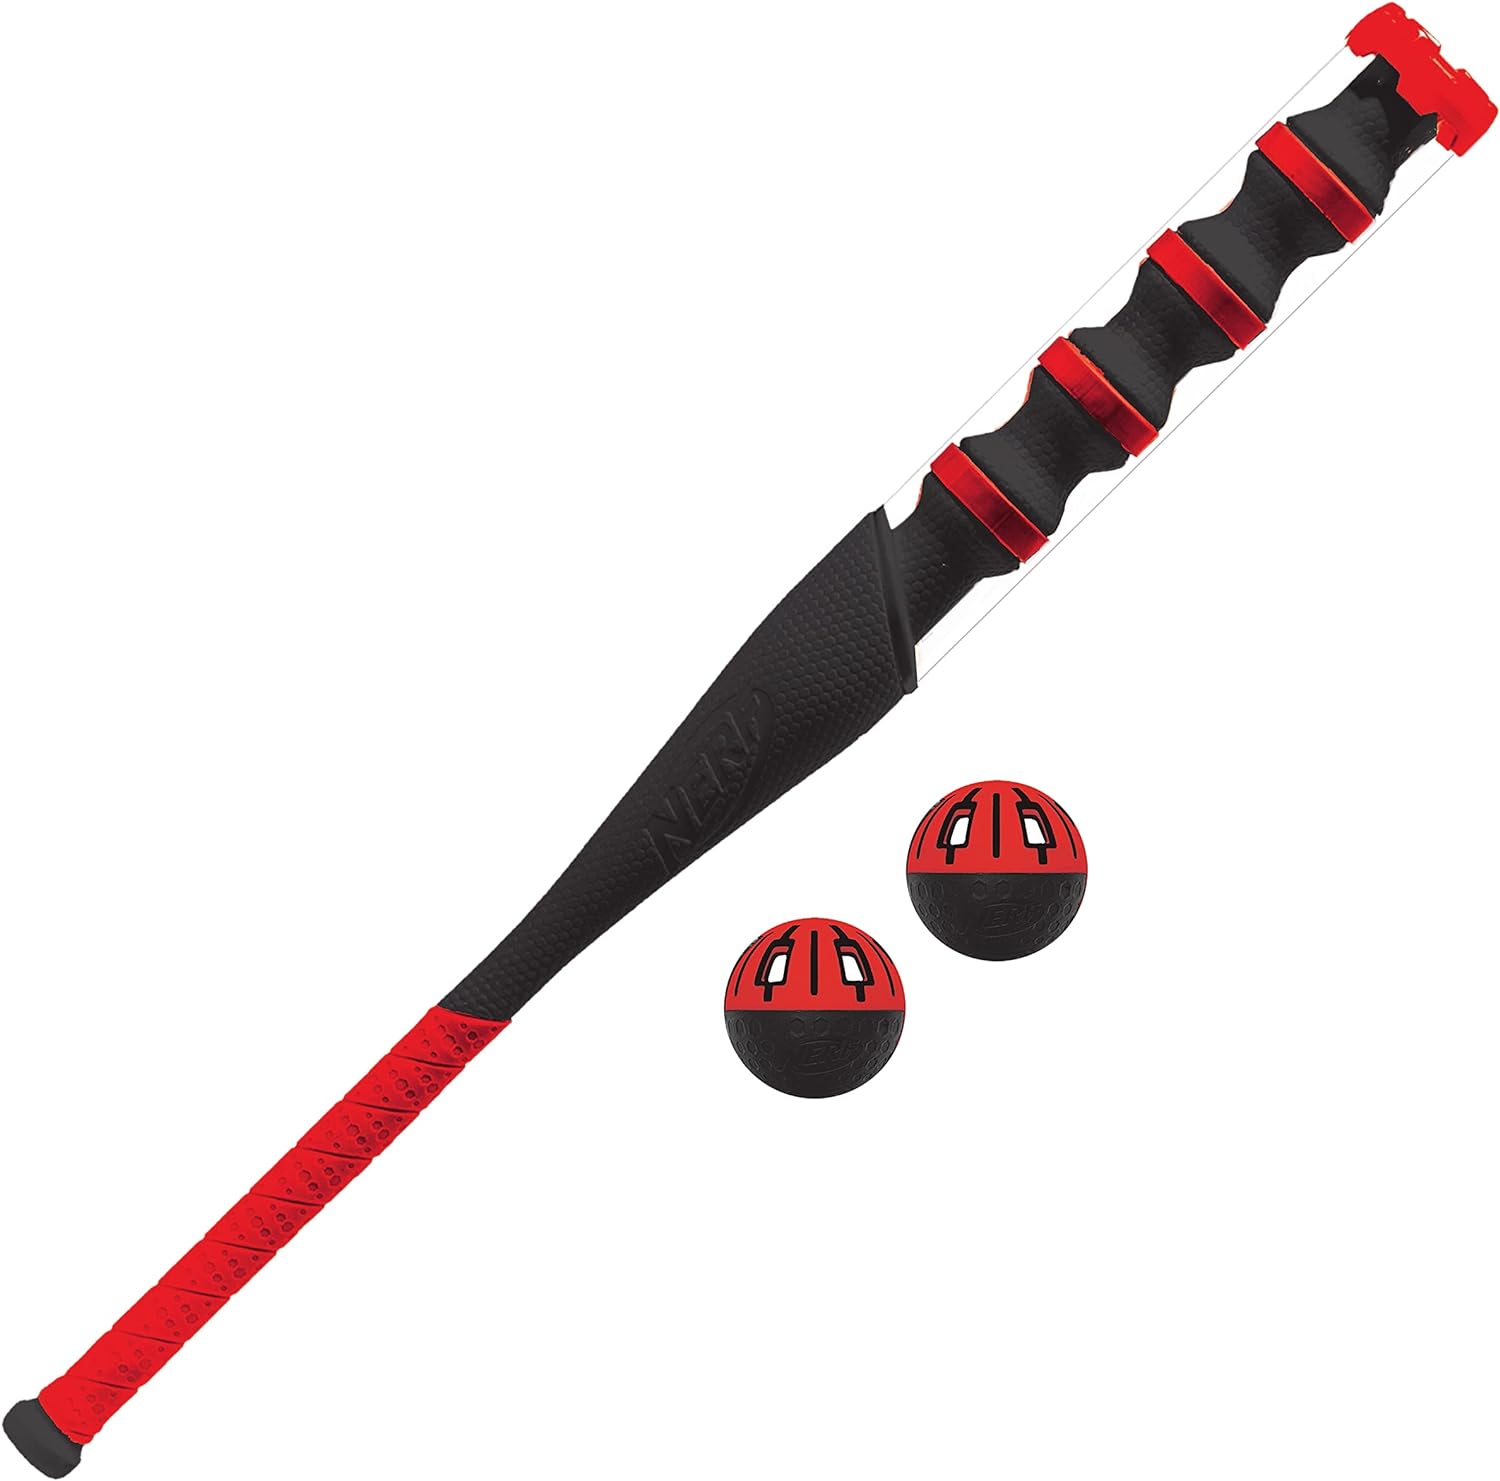 NERF Power Blast Kids Baseball Bat and Ball Set - Kids Plastic Baseball Bat with Extra Grip and Power Bands - Official Plastic Baseball Set